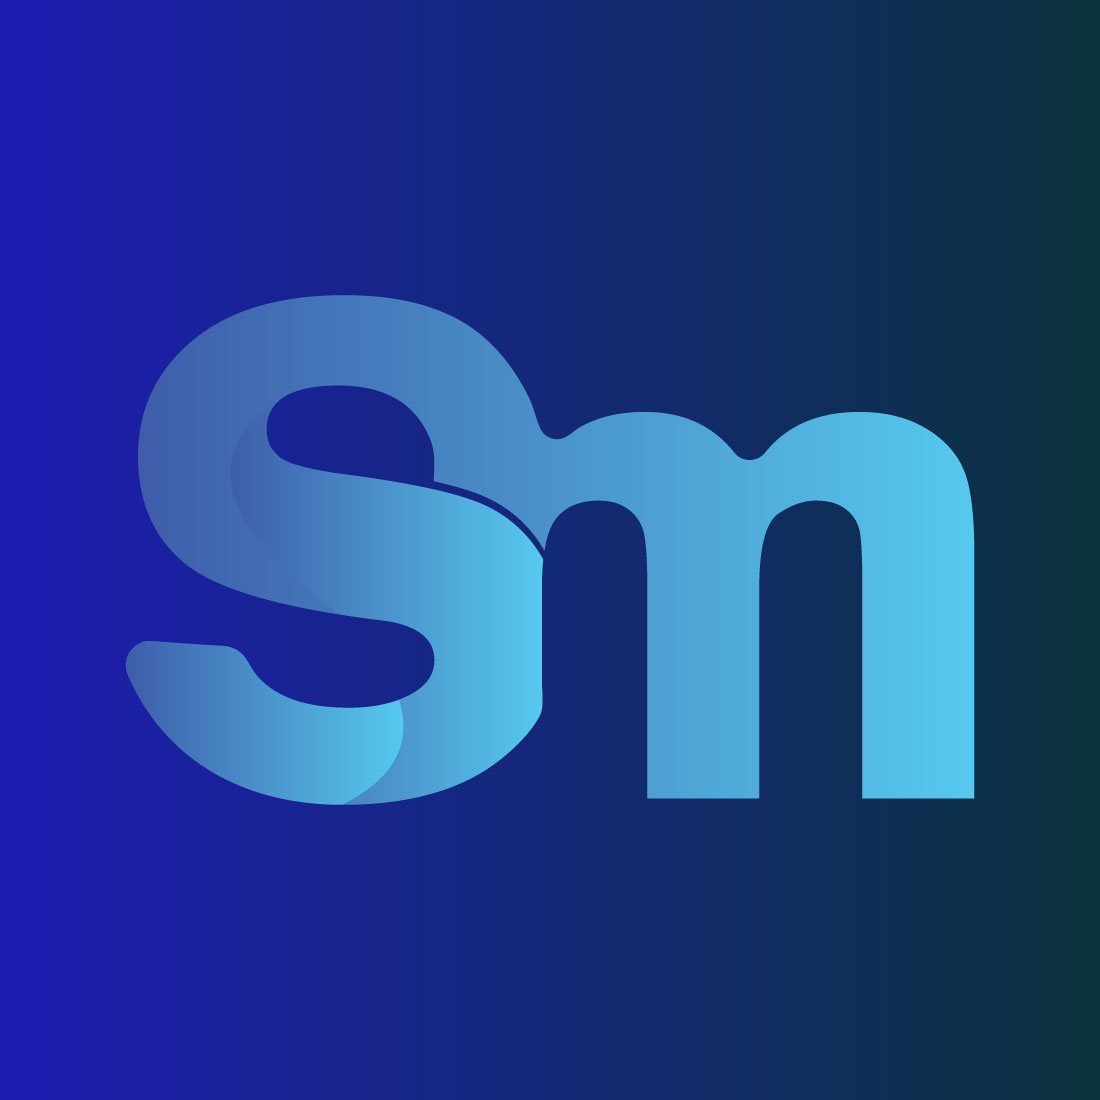 S M Letter Logo cover image.